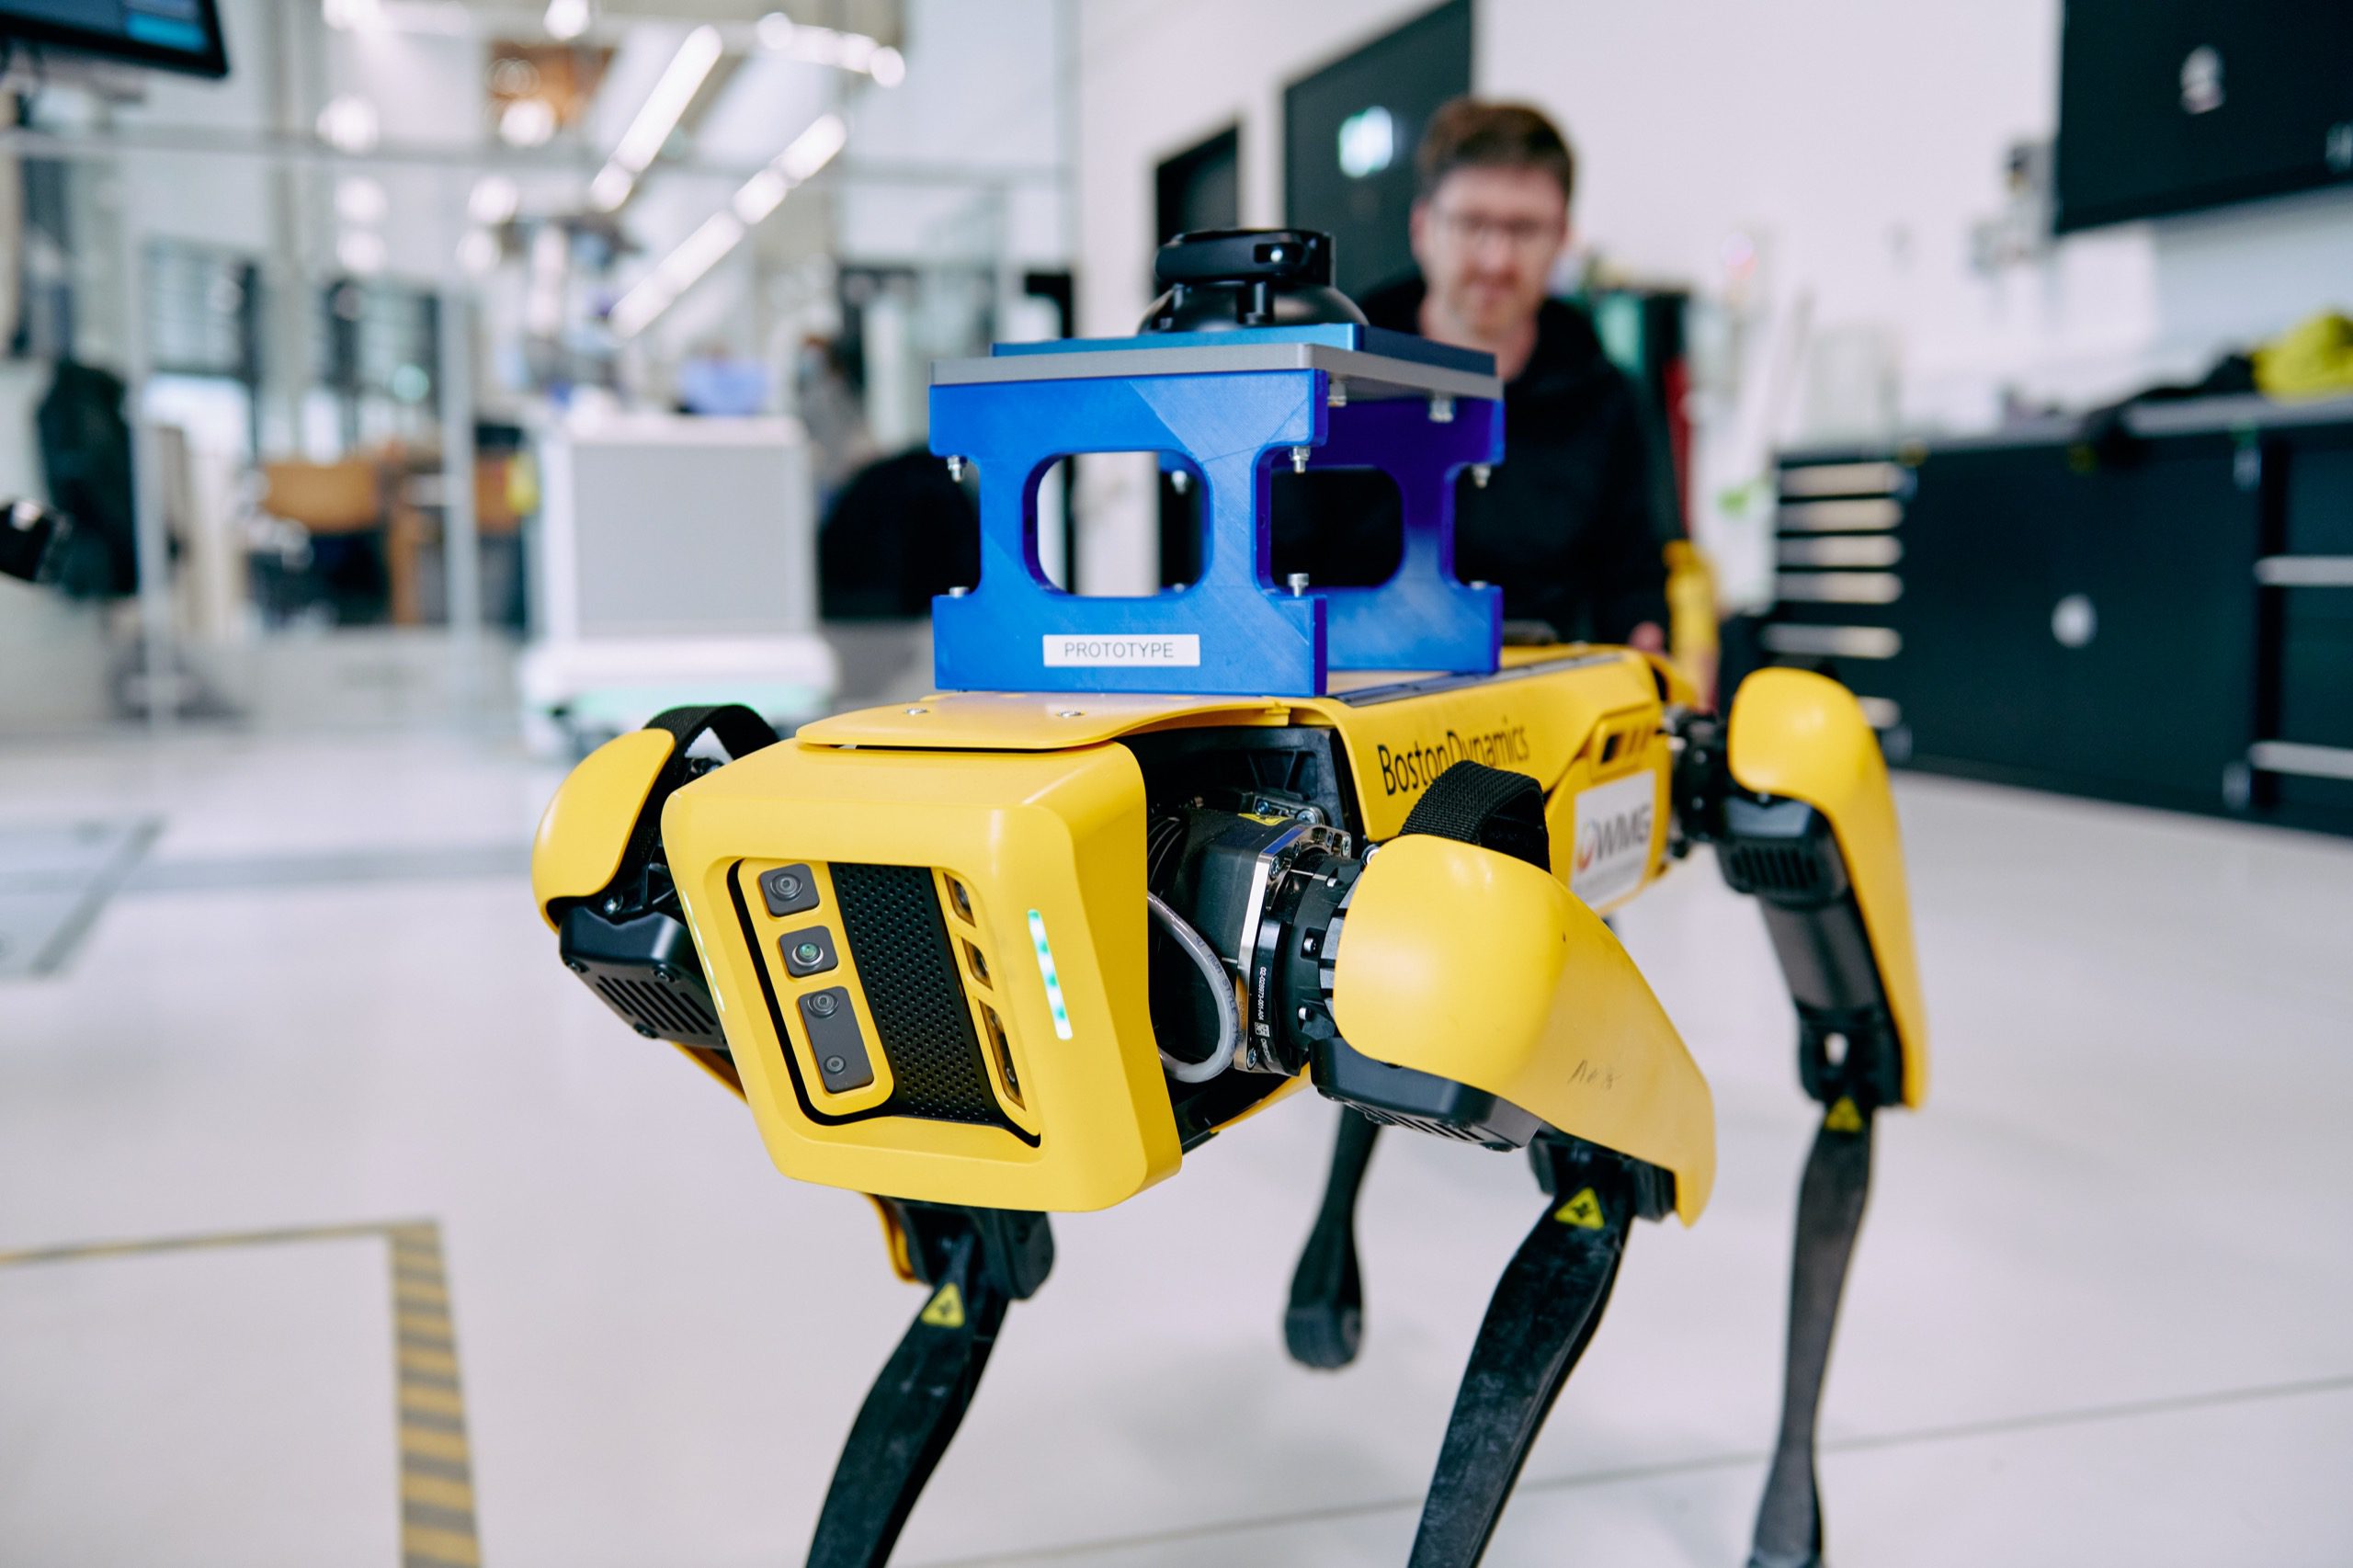 Boston Dynamics Spot robot. Walks on 4 legs like a large dog with a rectangular body.